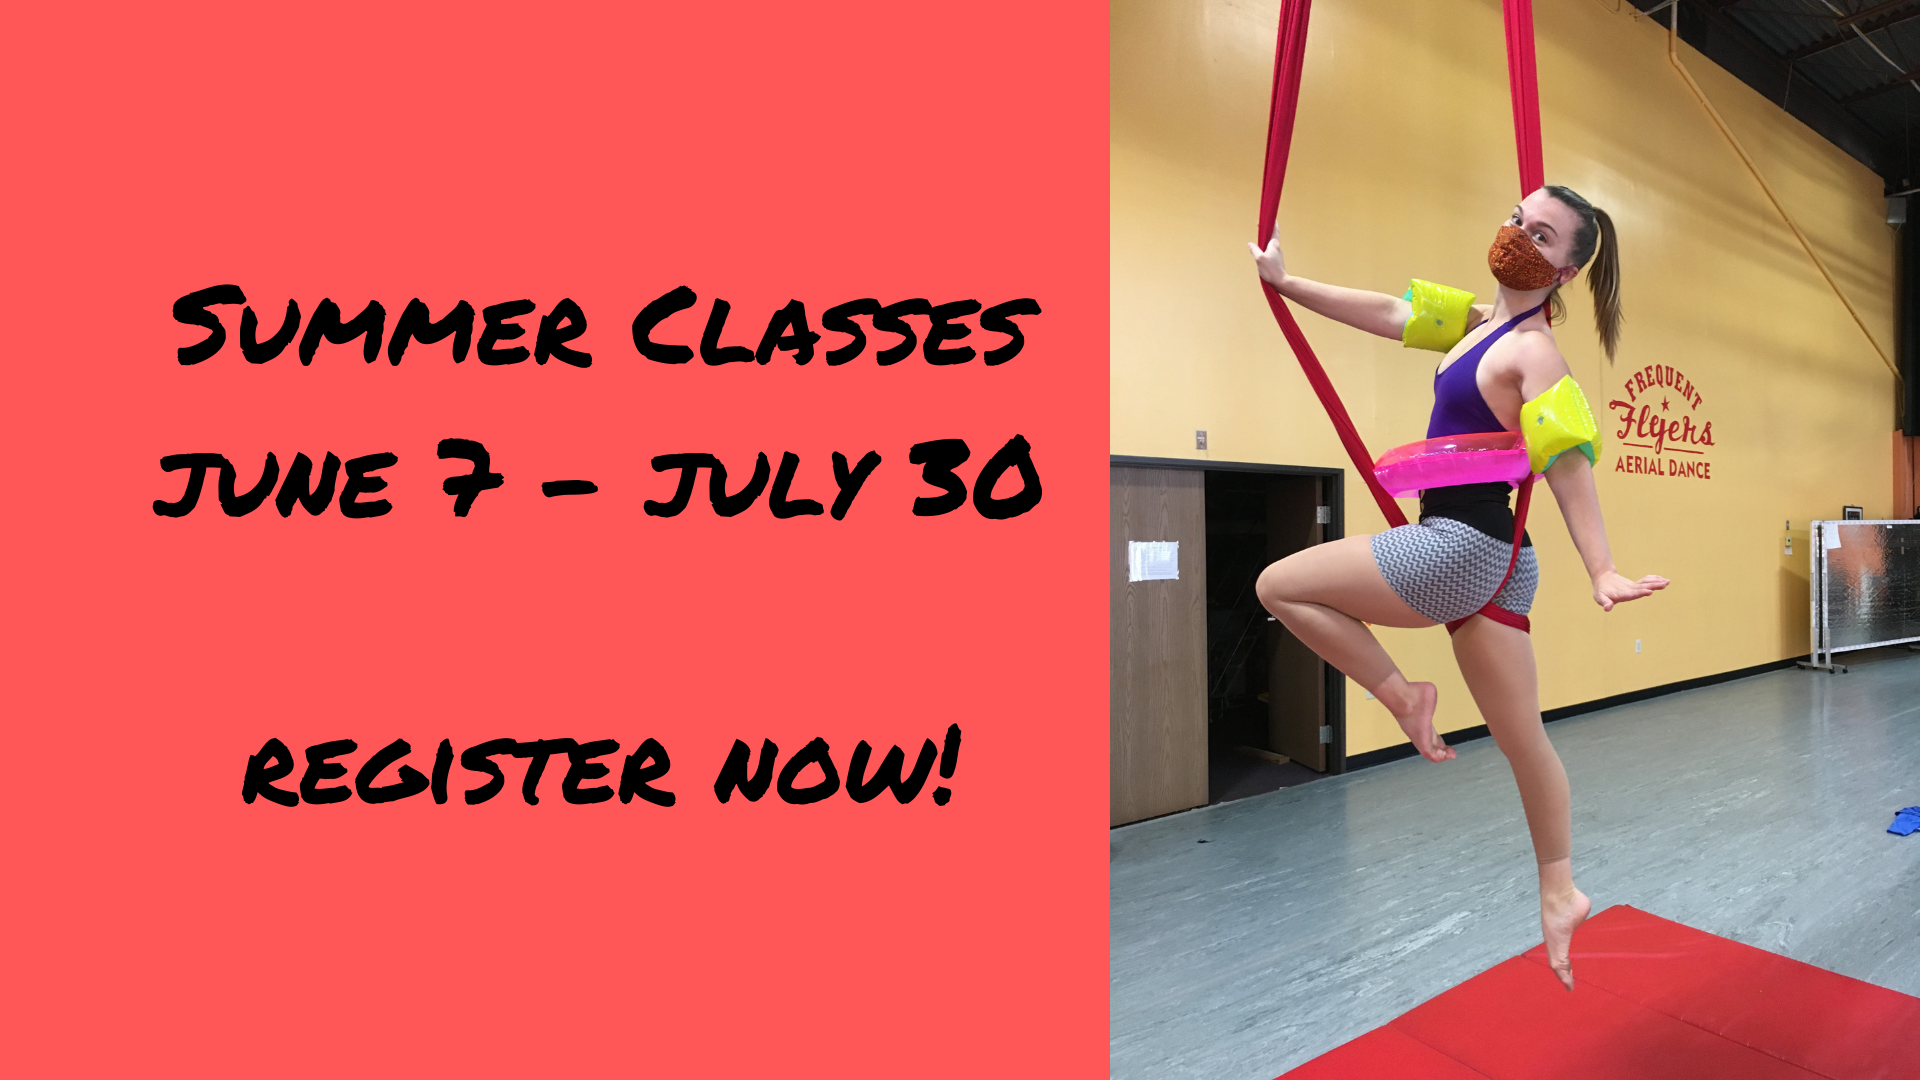 register-now-summer-classes-start-june-7-aerial-dance-classes-boulder-frequent-flyers